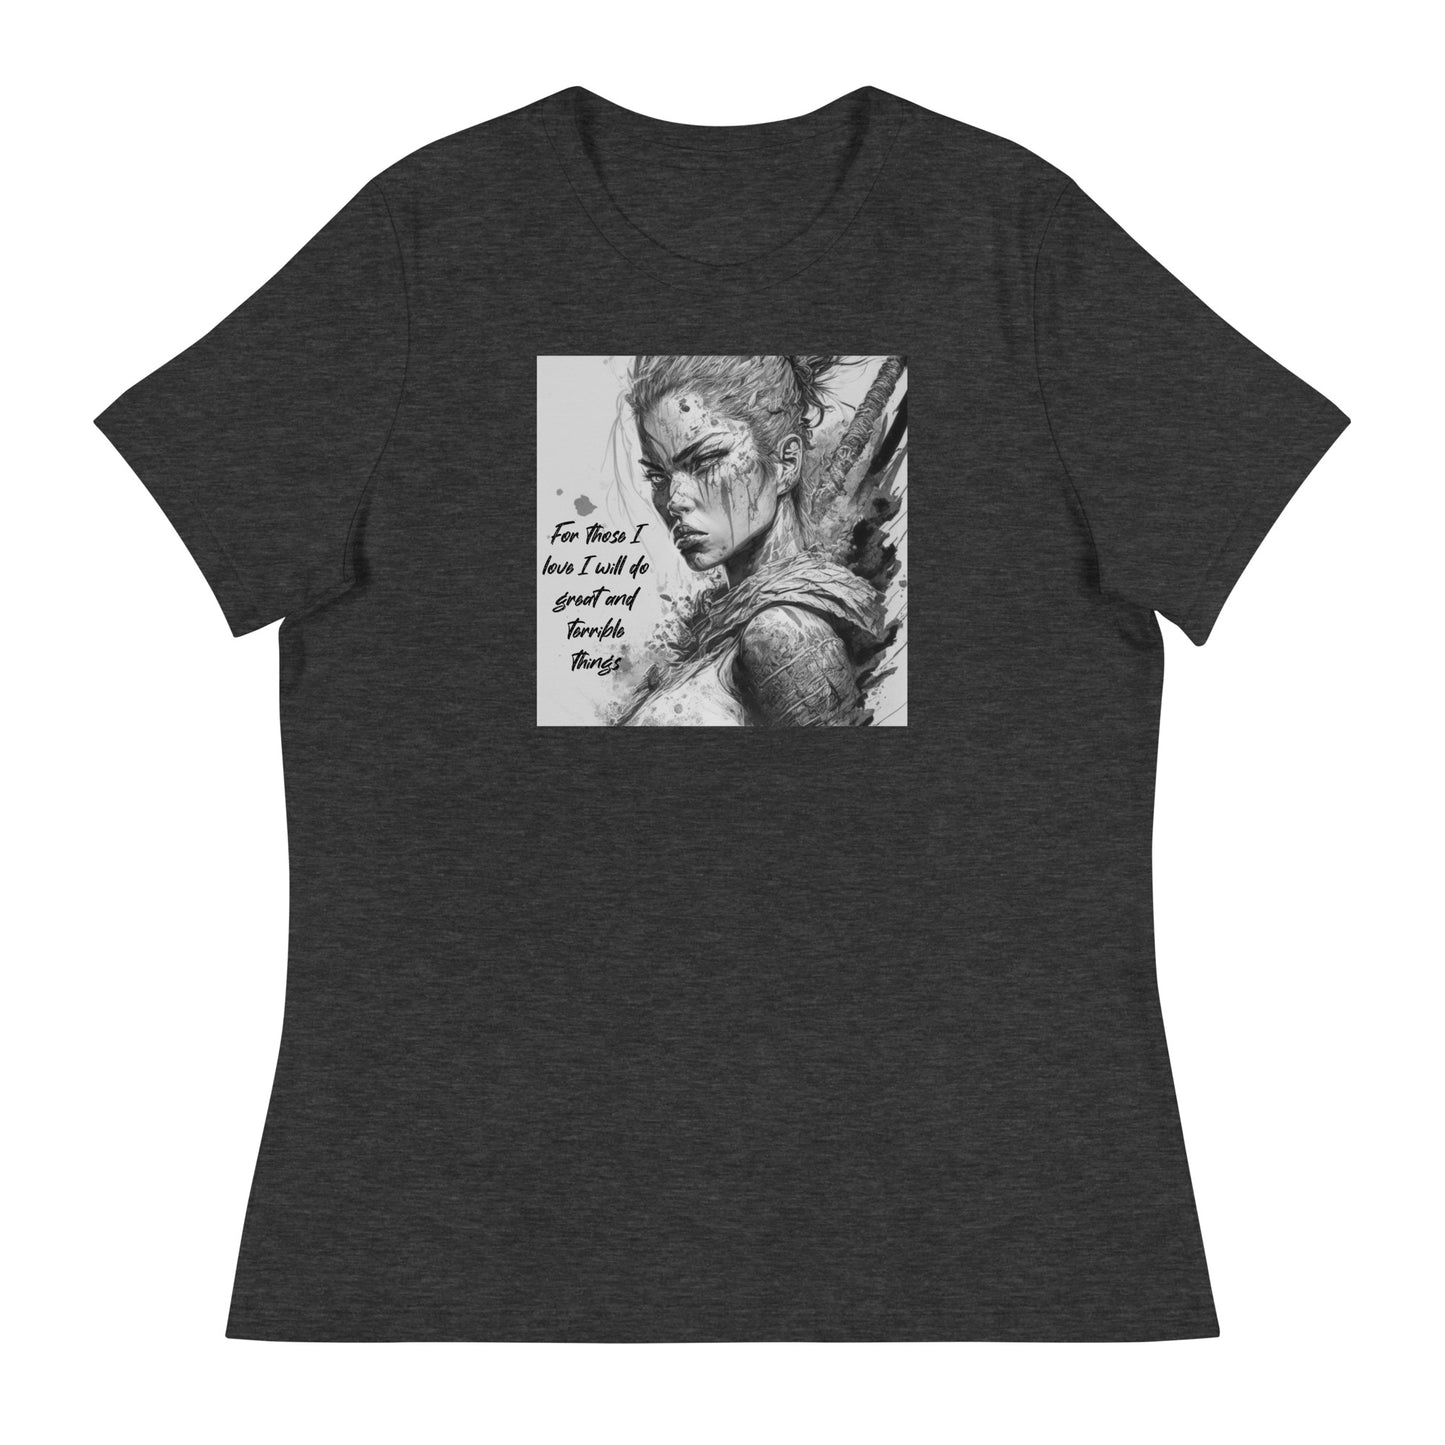 Great and Terrible Things Women's Graphic T-Shirt Dark Grey Heather